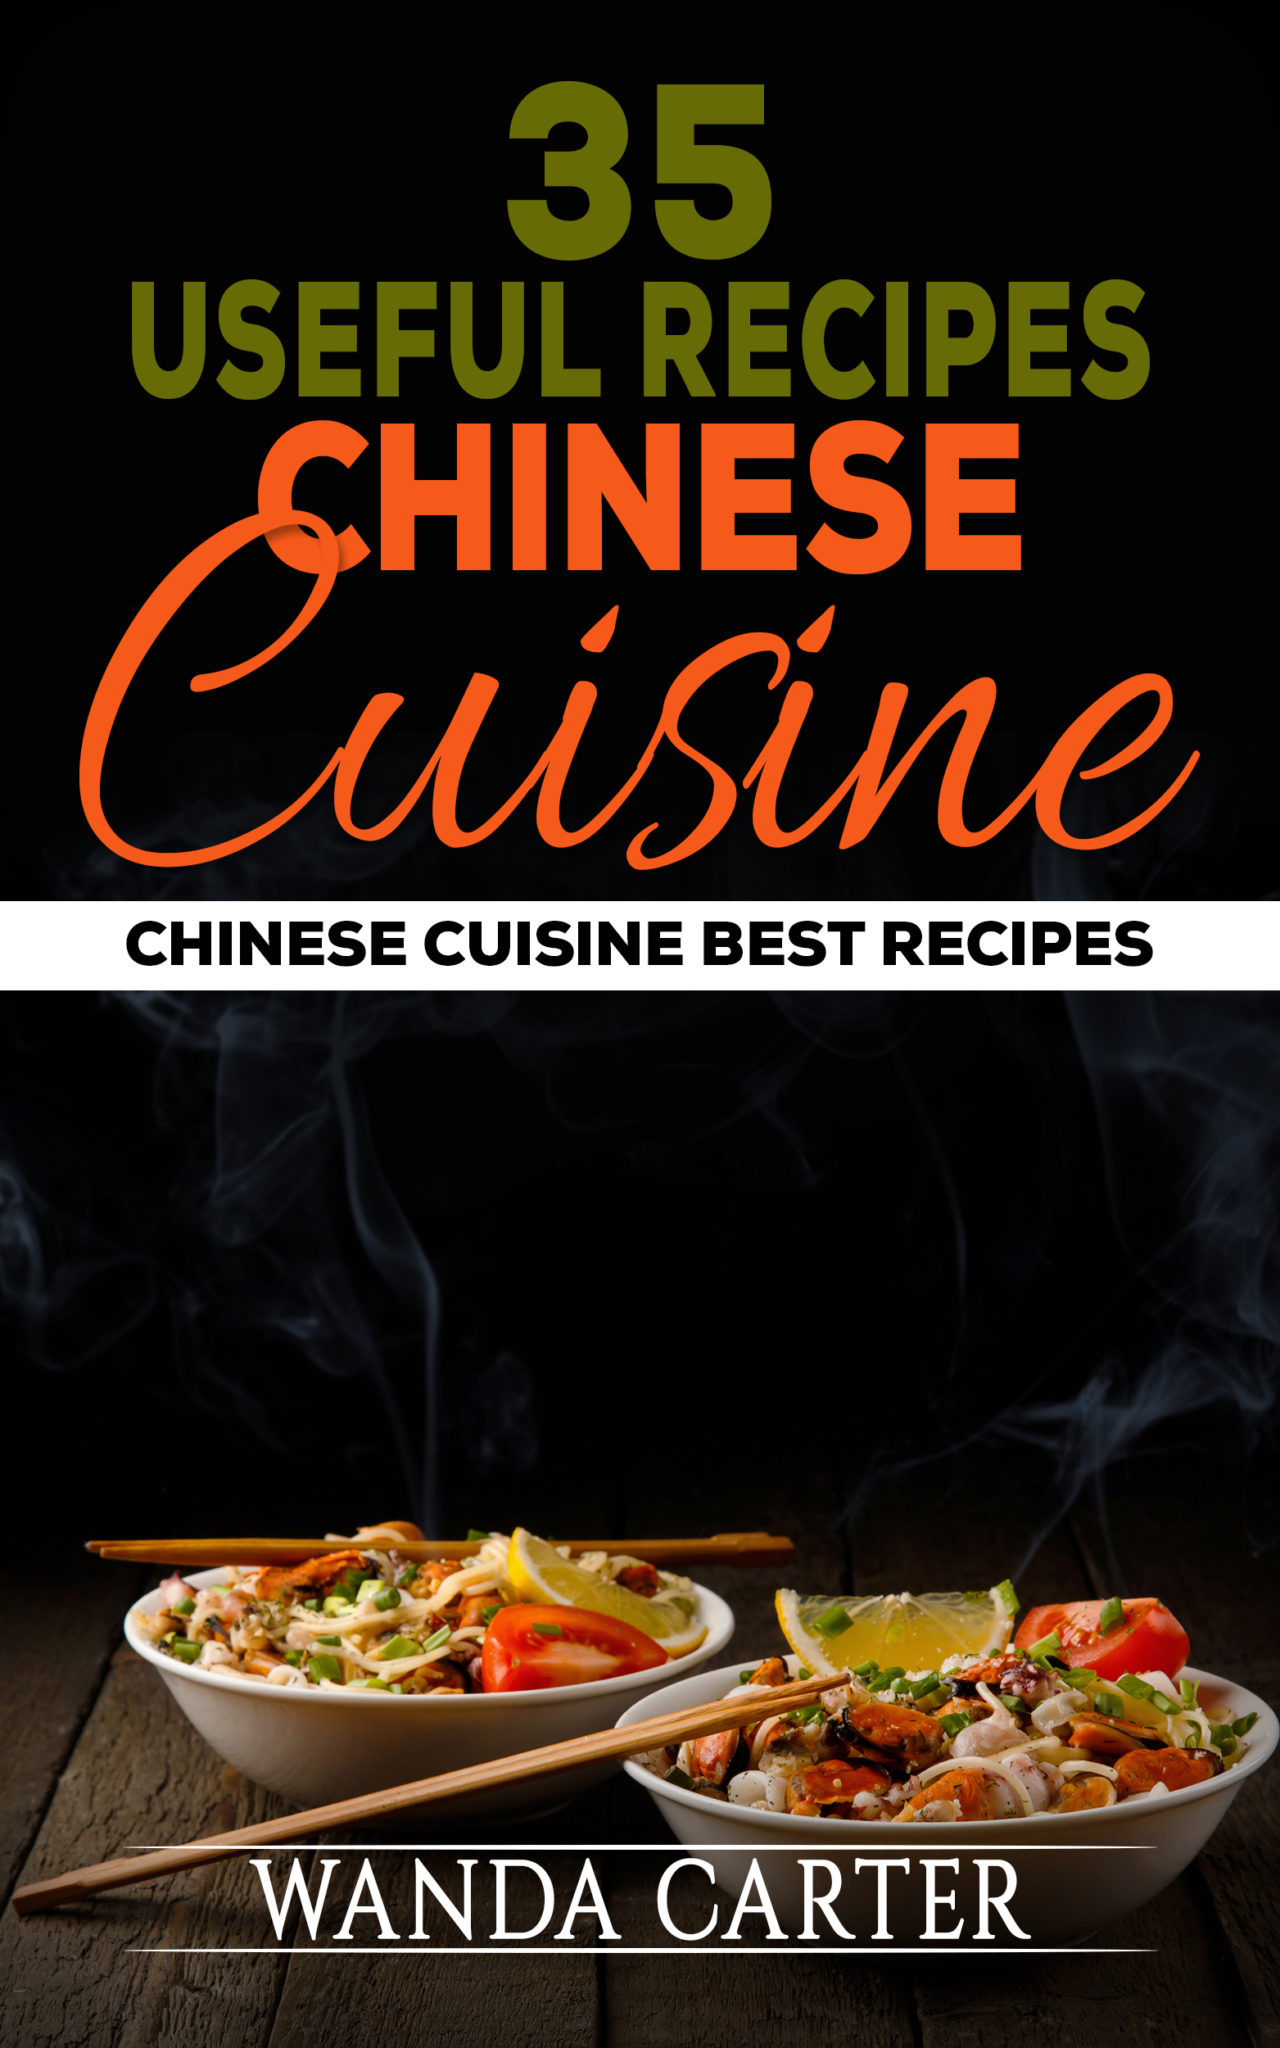 FREE: 35 Useful Recipes Chinese Cuisine by Wanda Carter